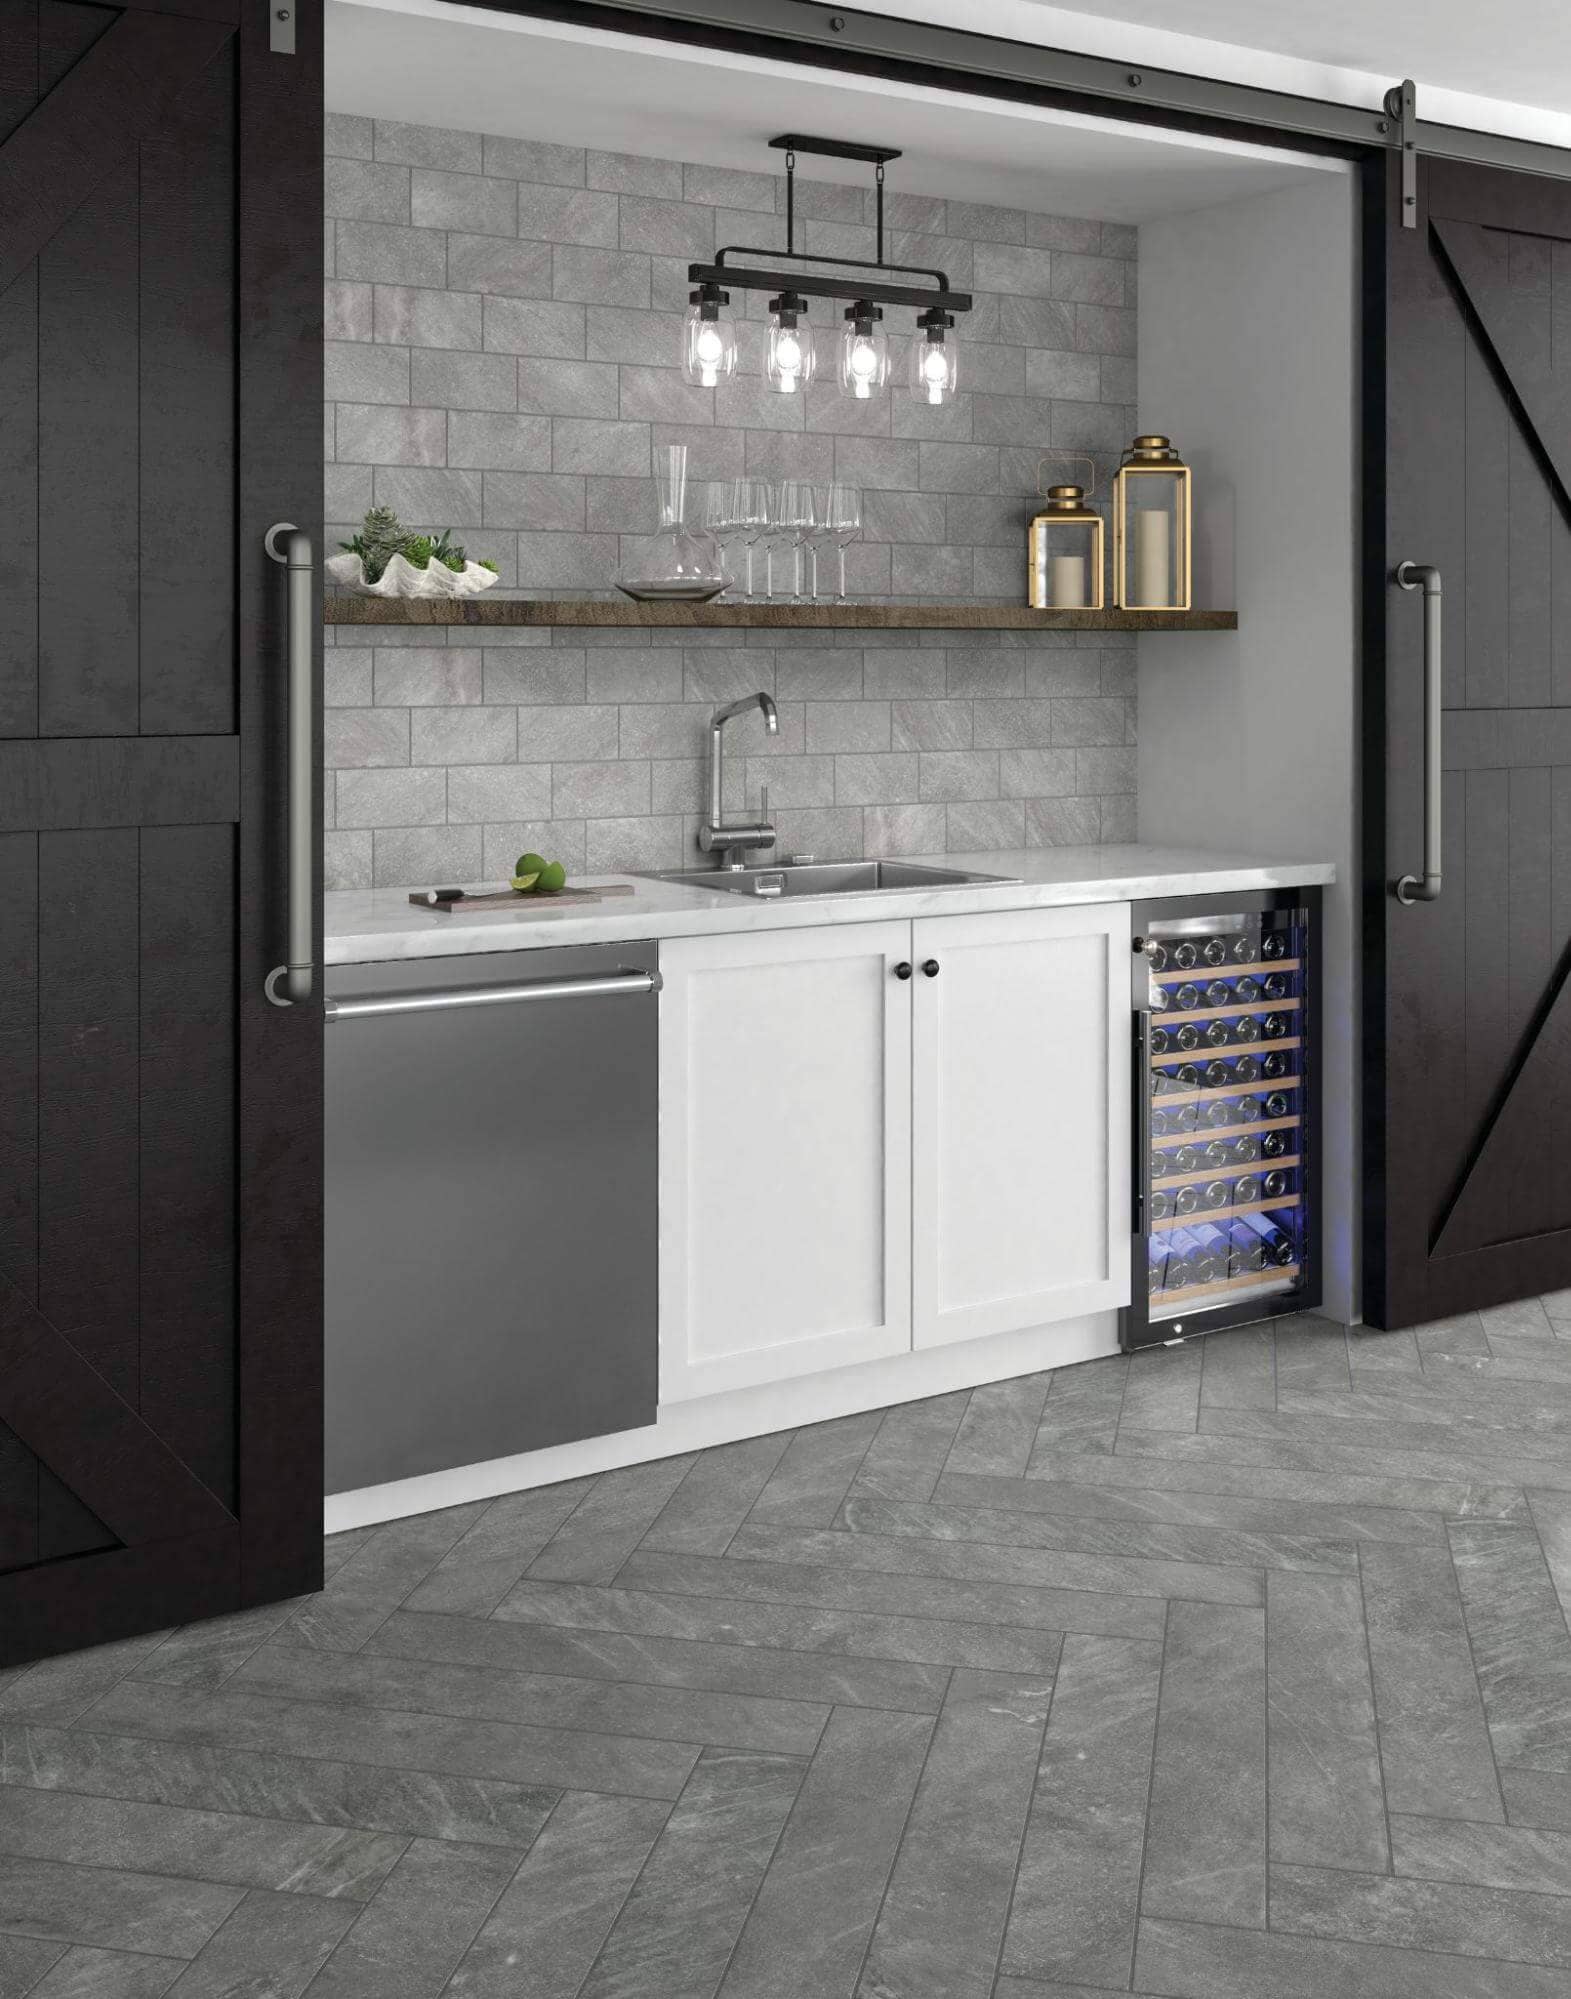 Modern kitchen with herringbone tile floor pattern